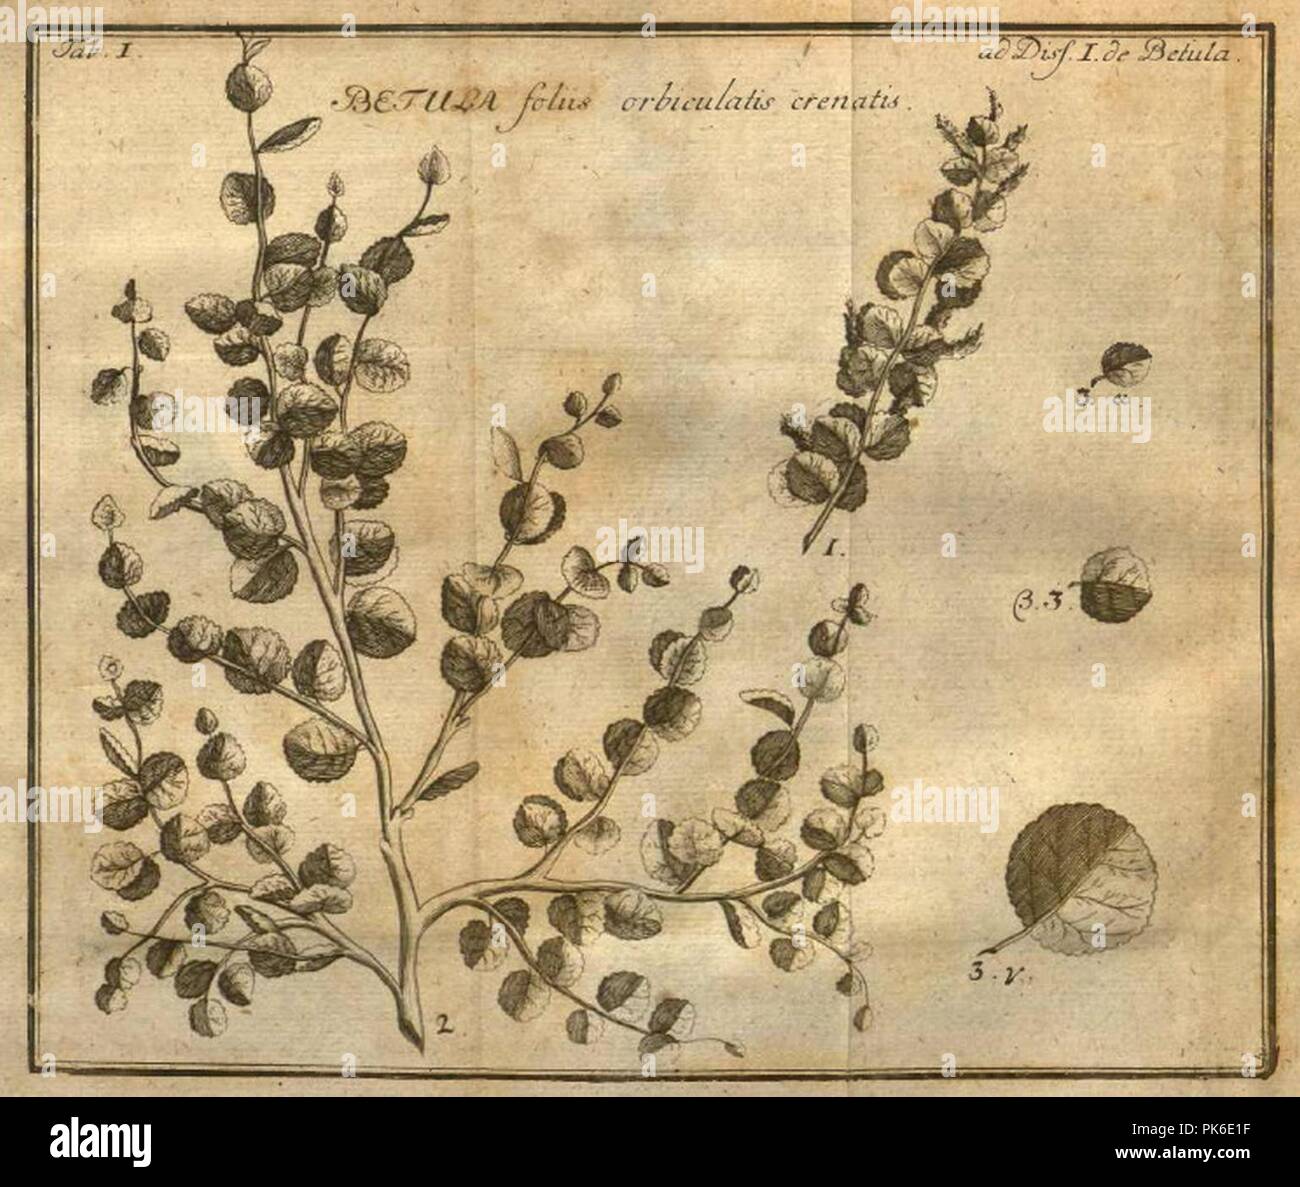 Betula nana Linnaeus Amoenitates academicae. Stock Photo